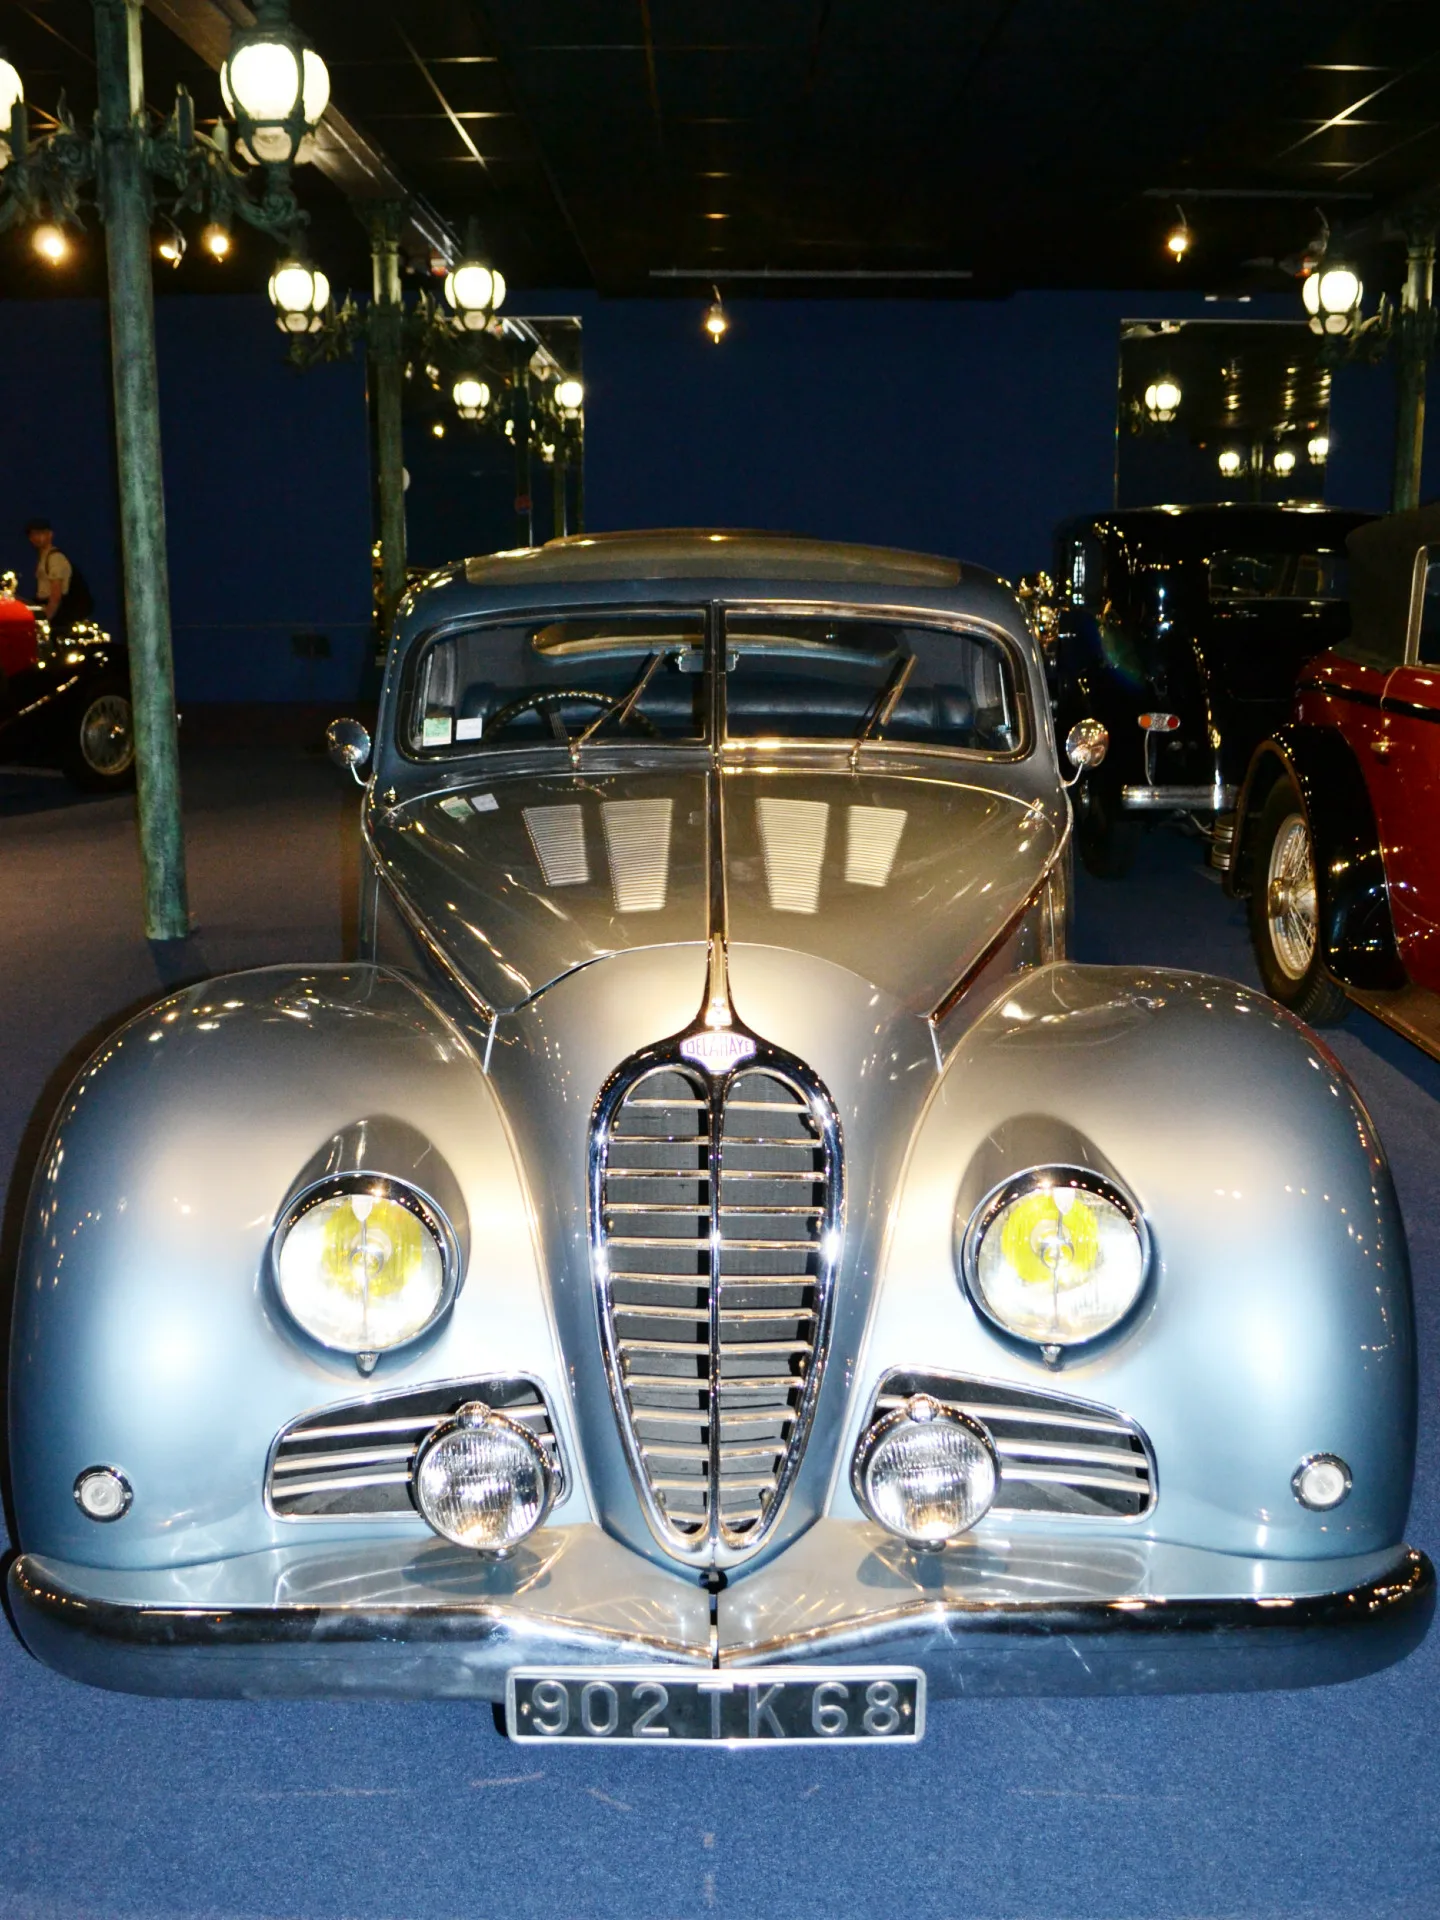 Cite de l’ Automobile, Μουσείο αυτοκινήτου στην Αλσατία 169